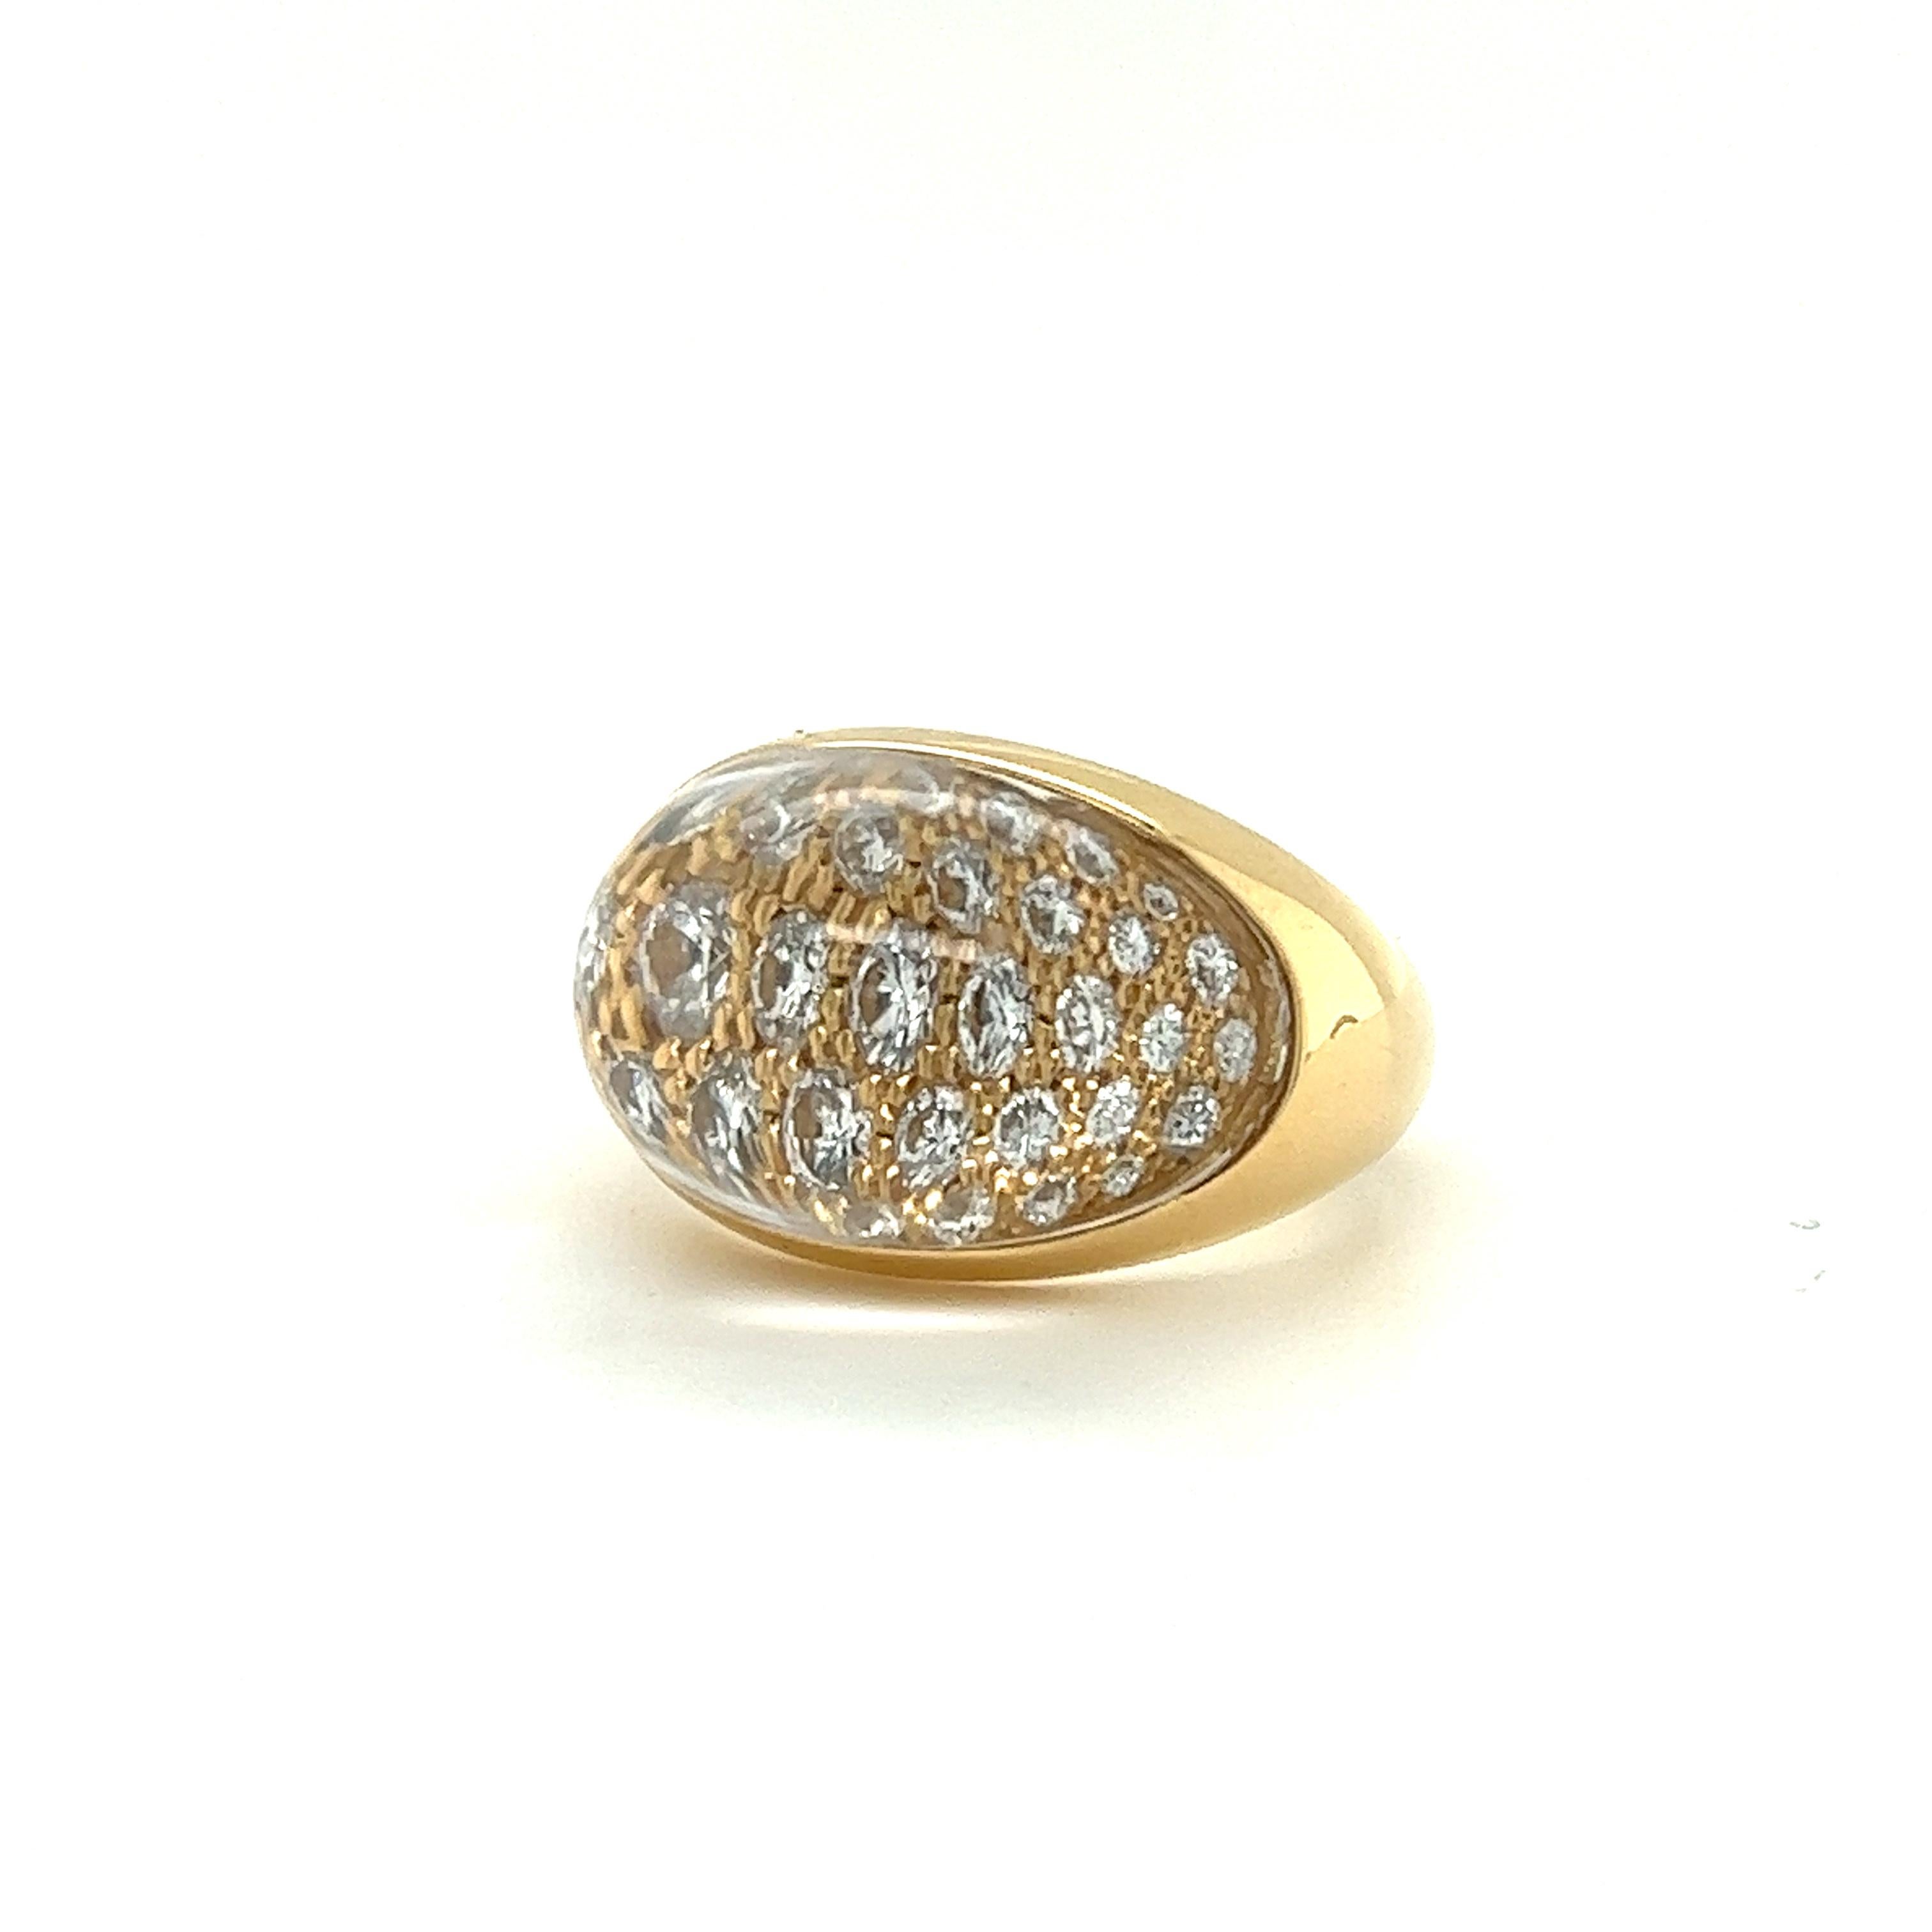 Retro Vintage Myst De Cartier Rock Crystal and Diamond Ring 18k Yellow Gold